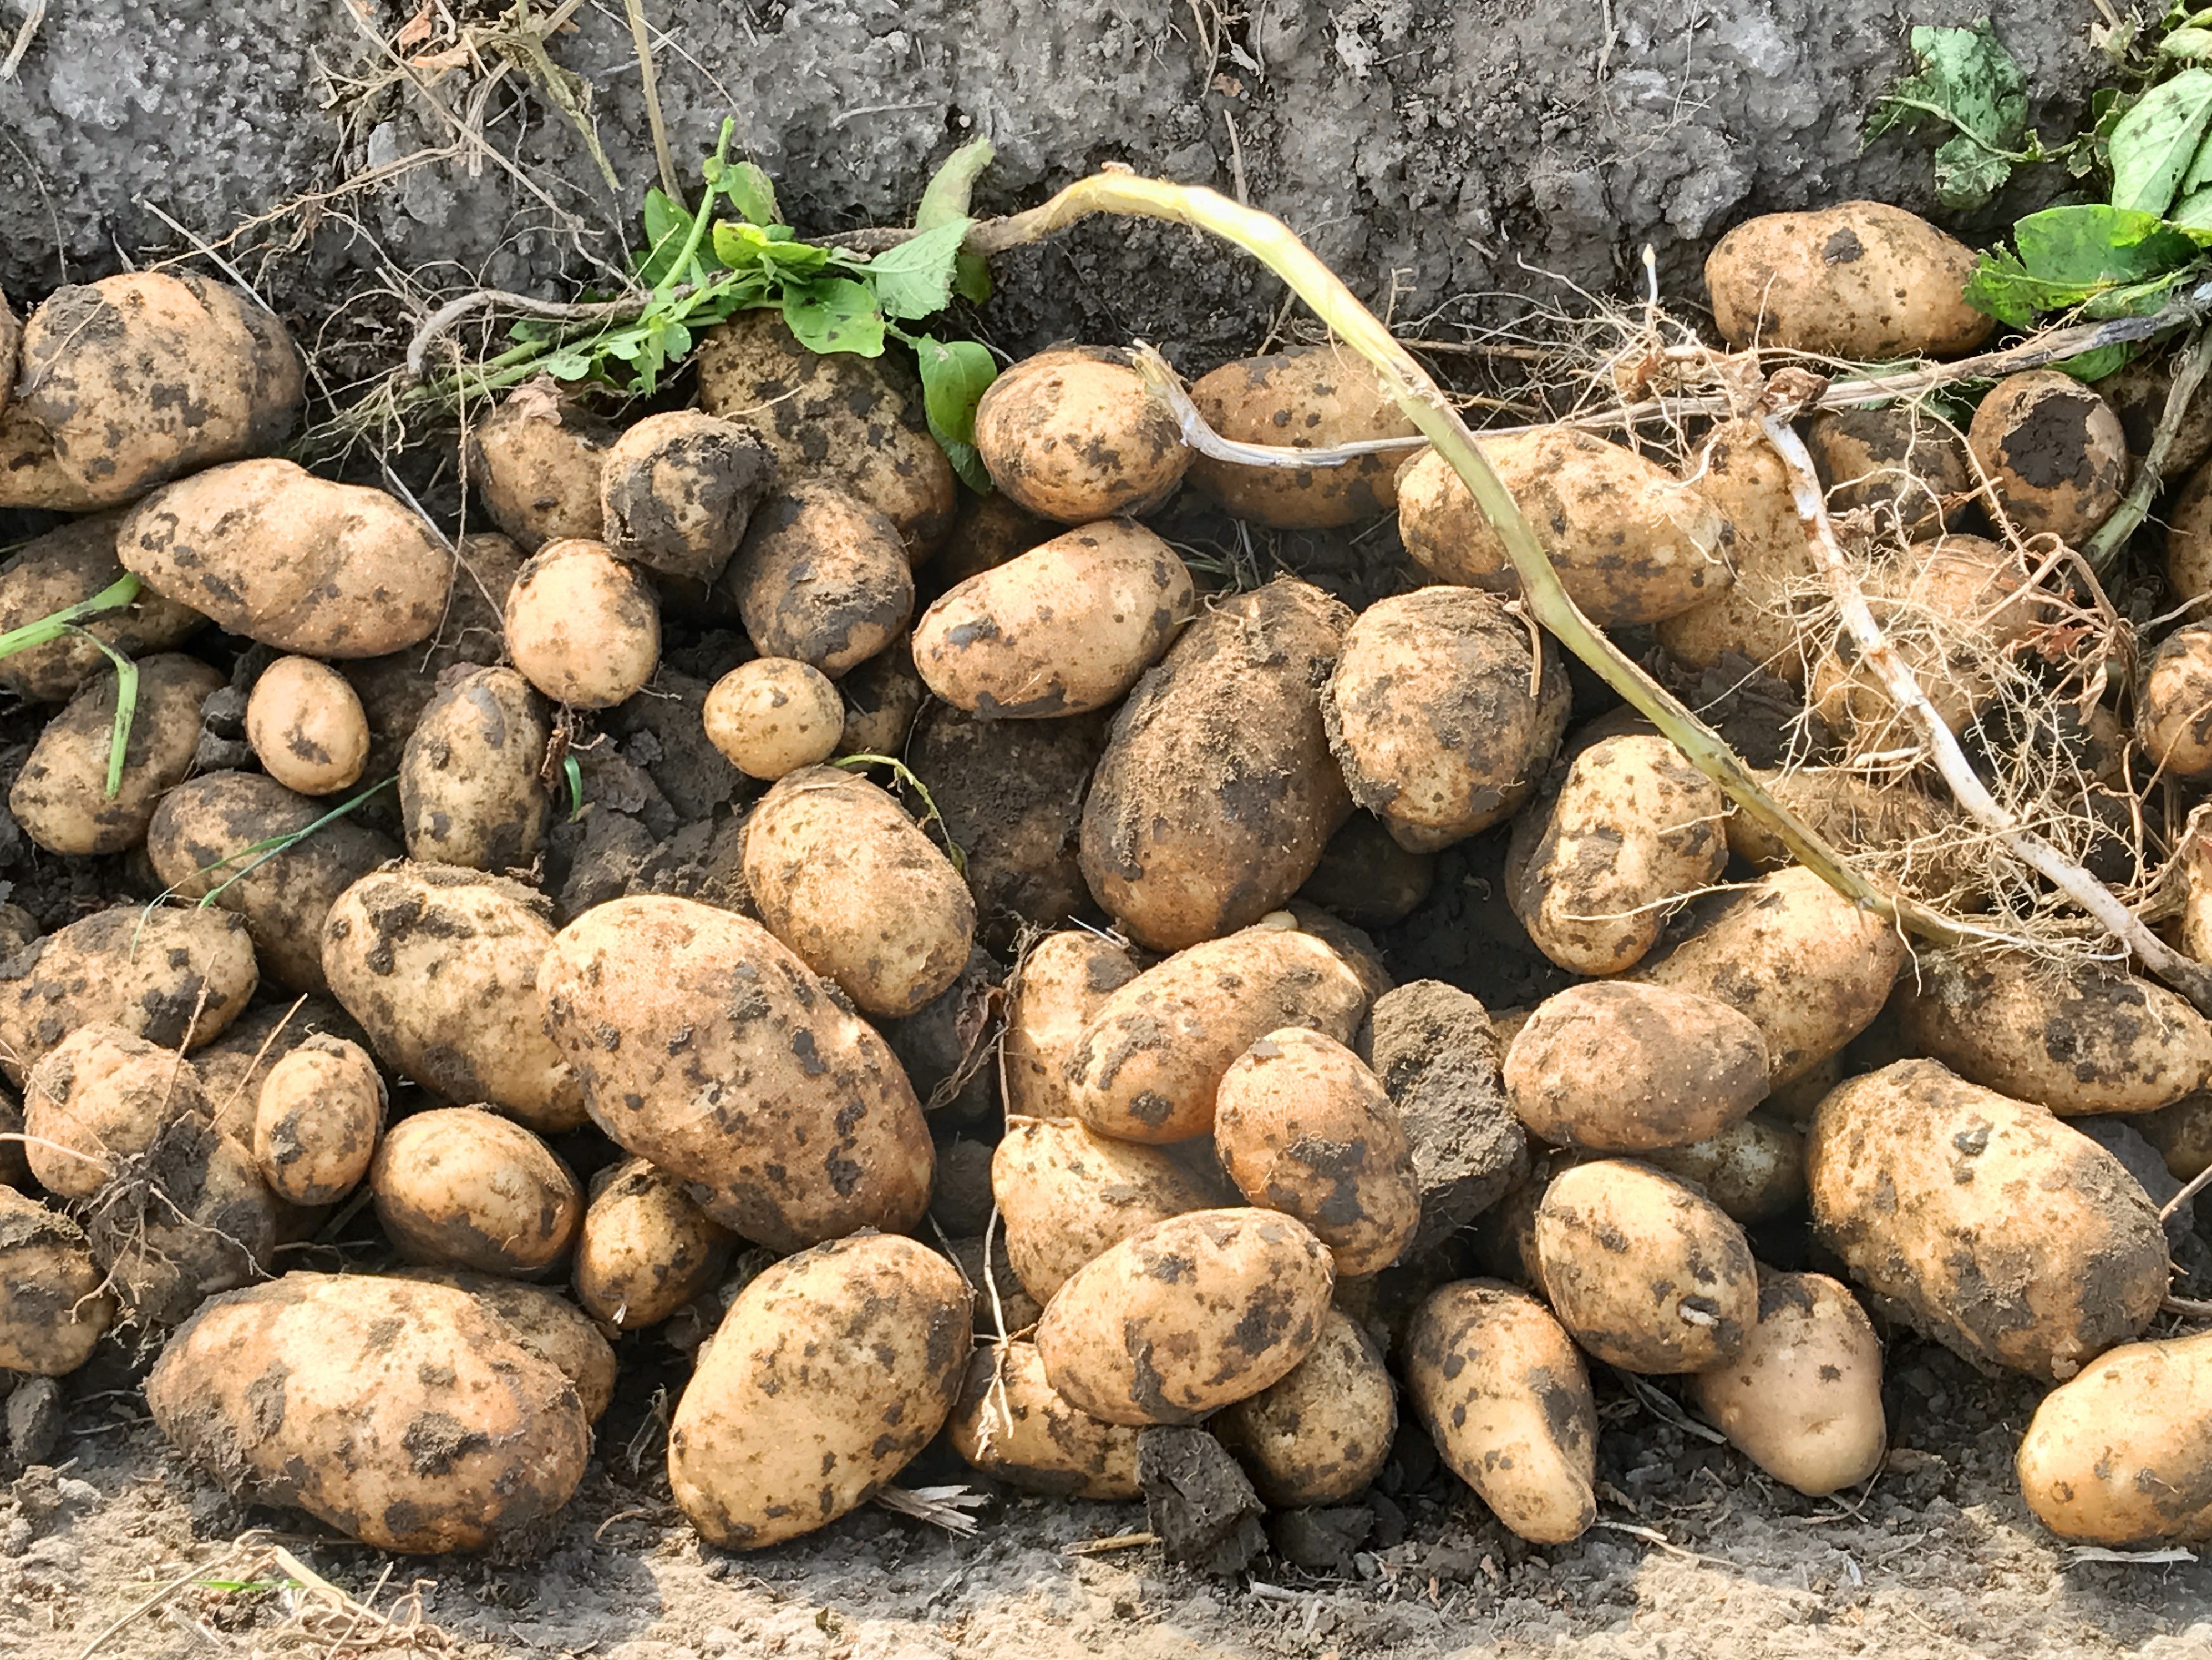 Potatoes in the field